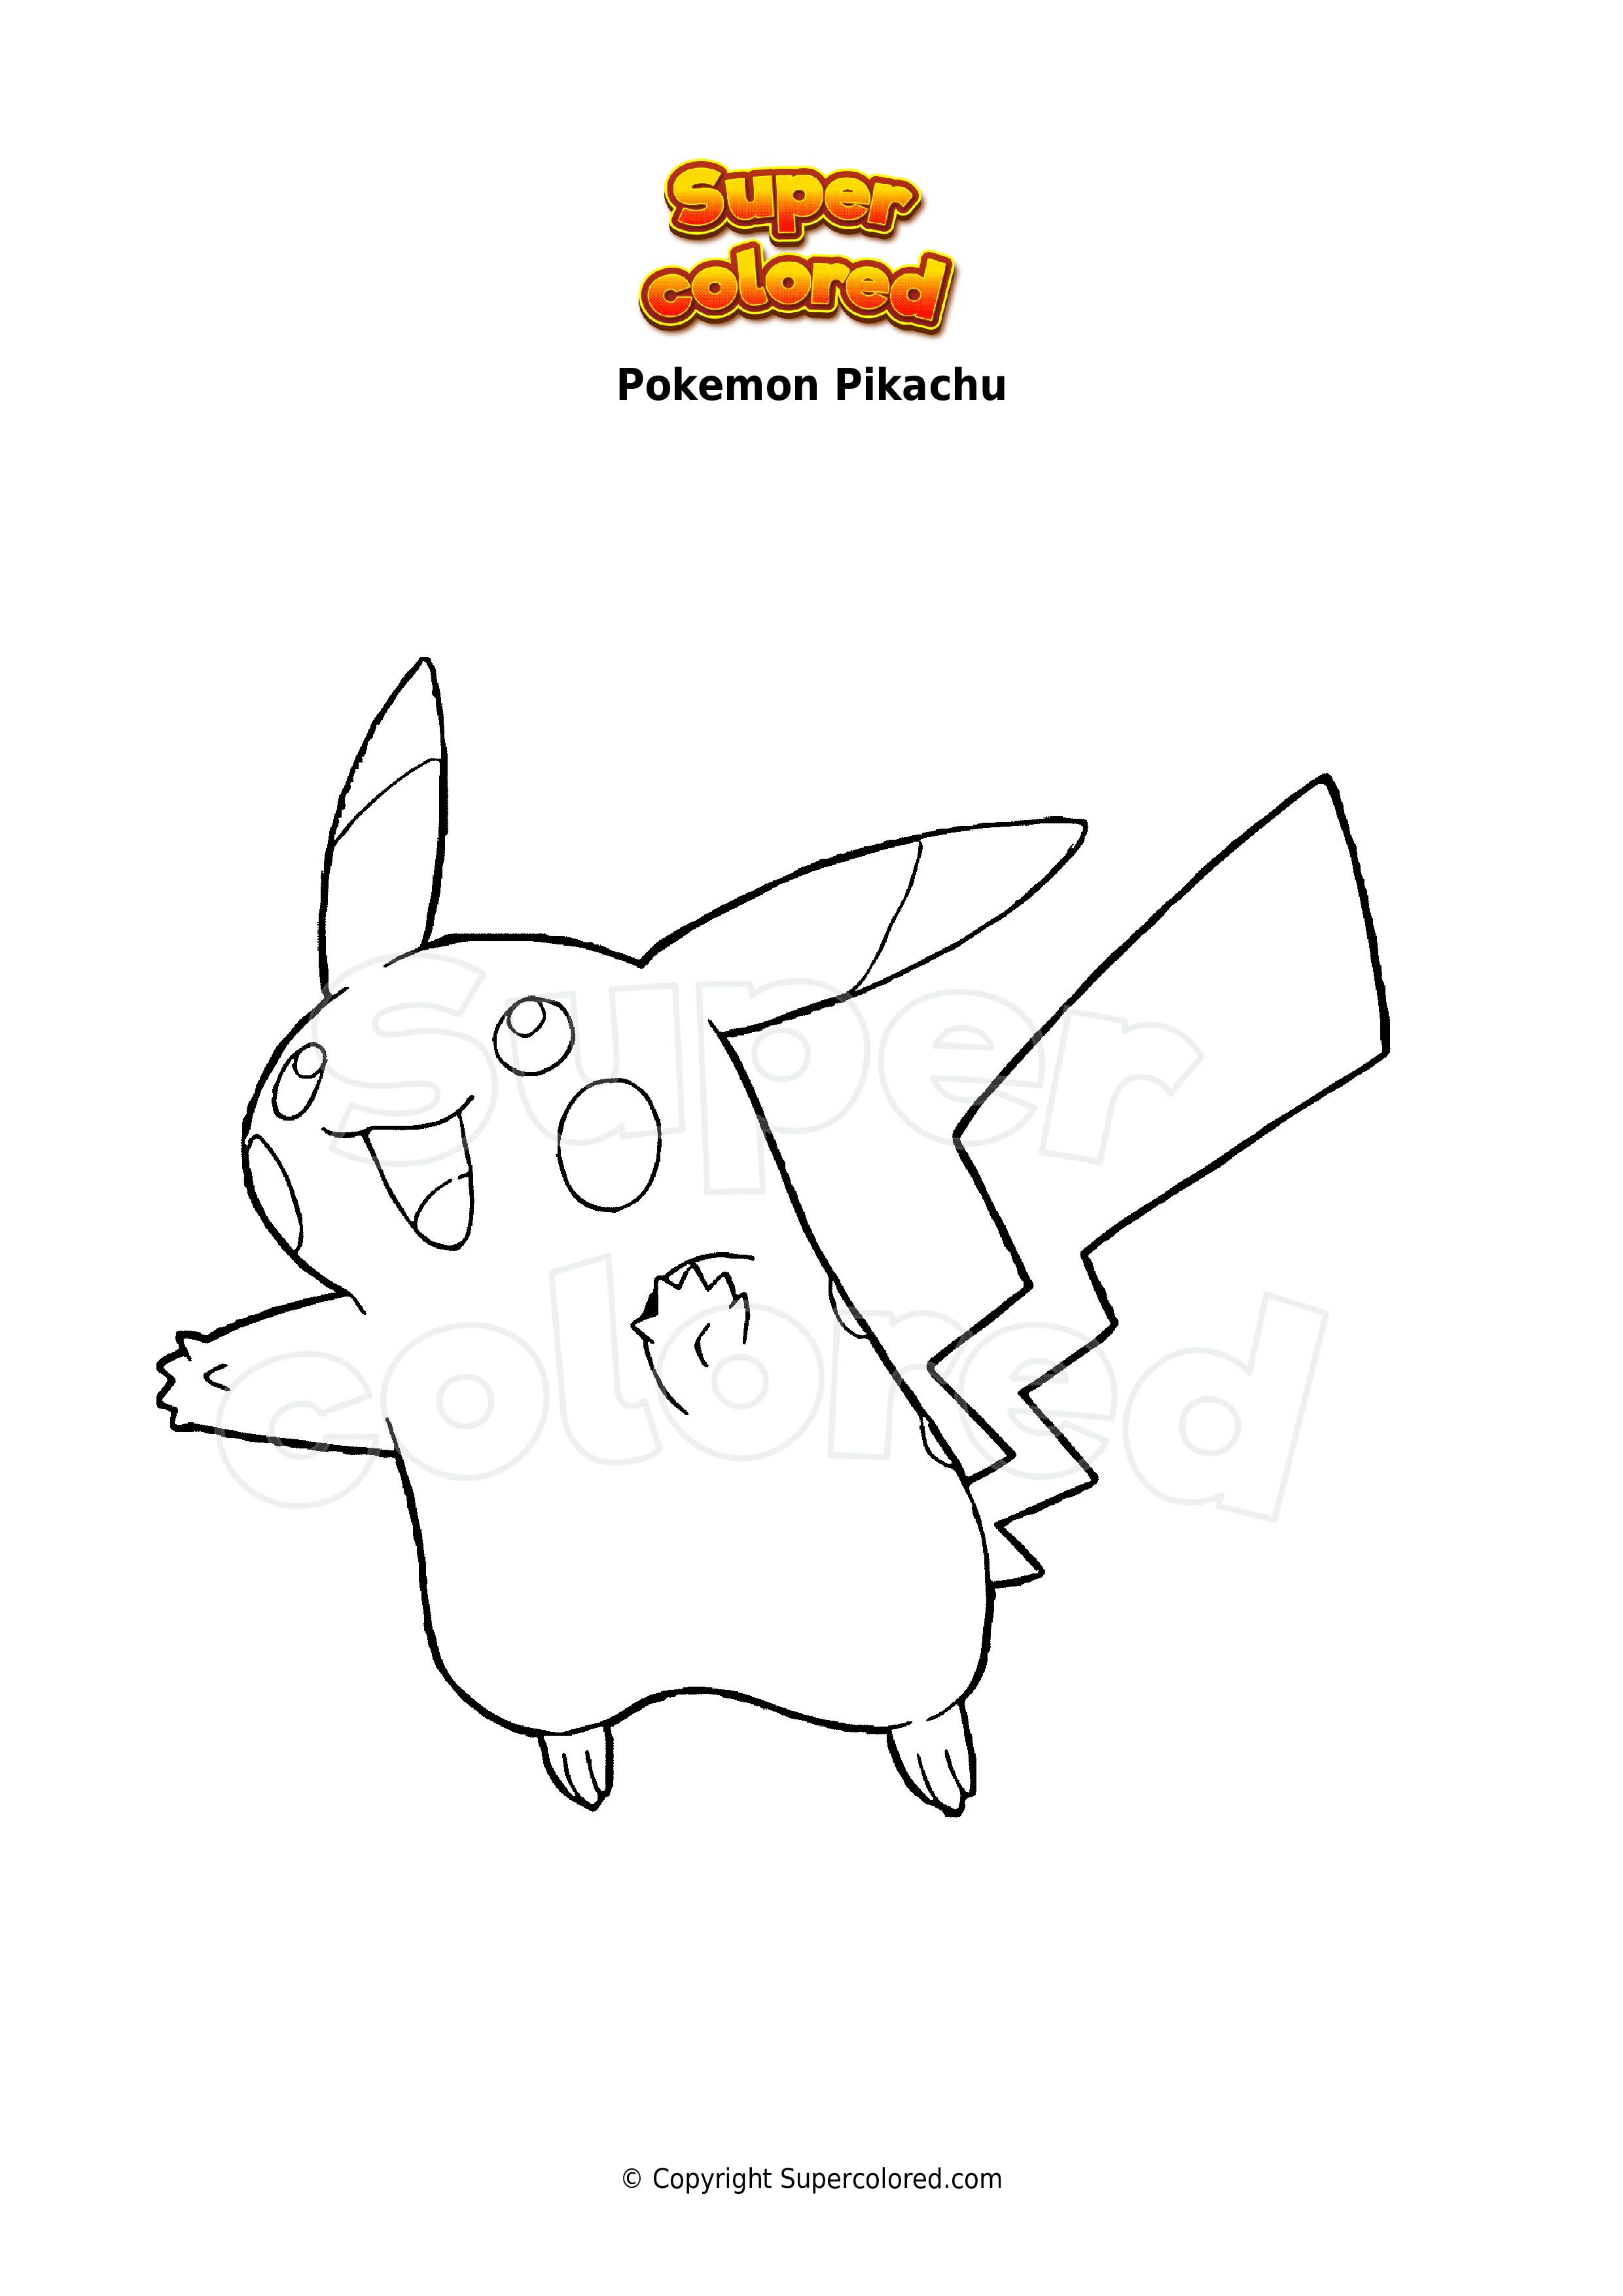 Coloring page Pokemon Pikachu - Supercolored.com